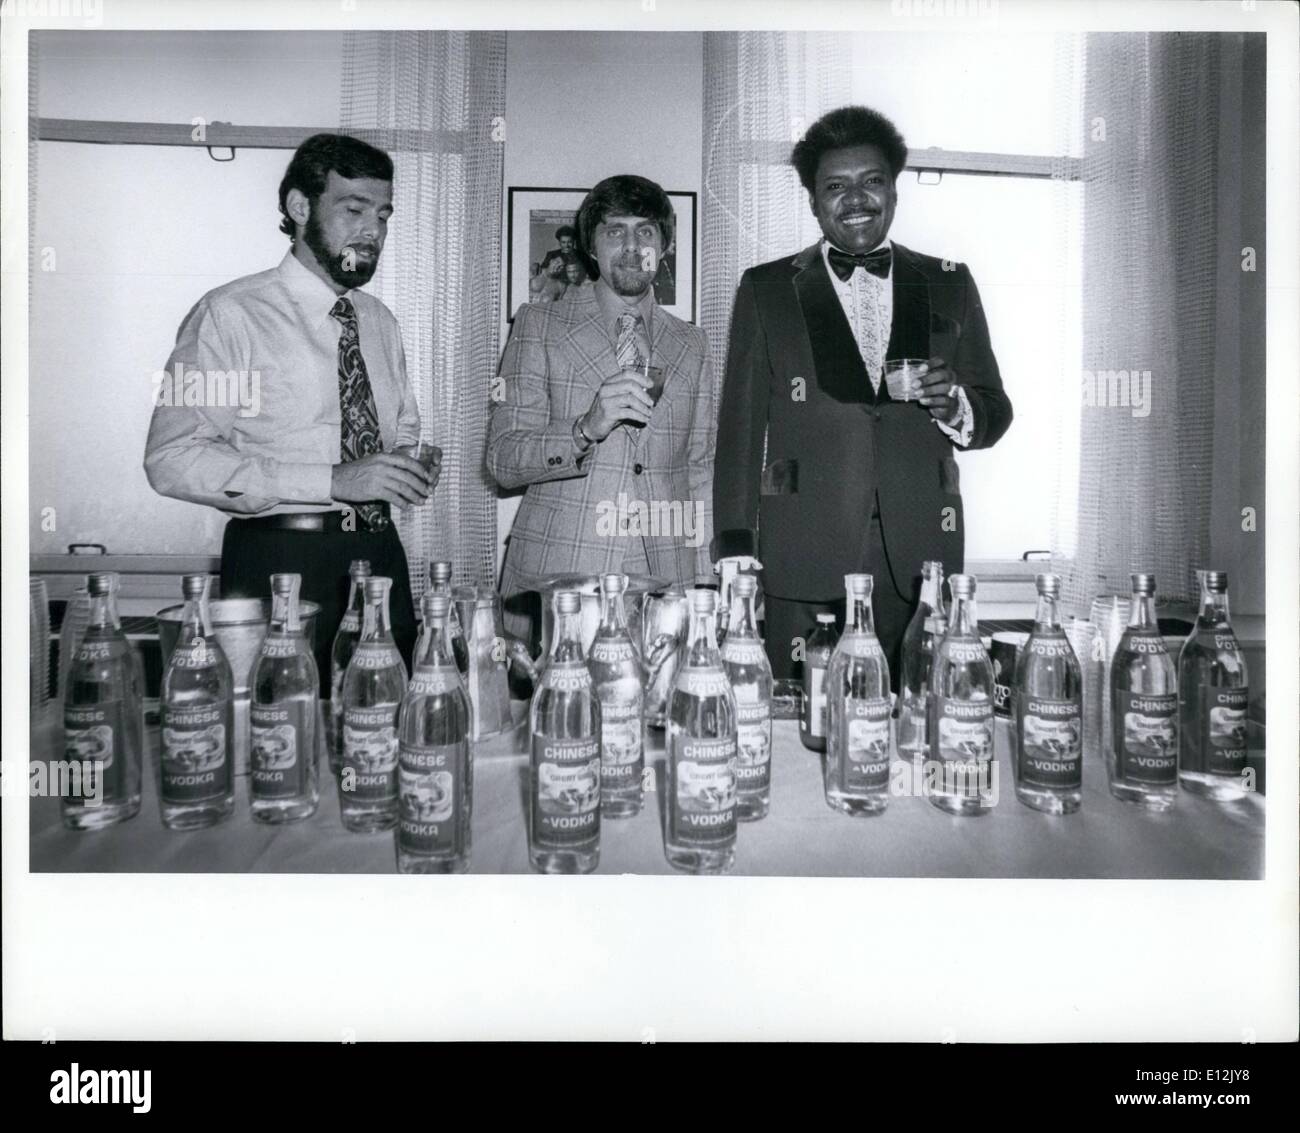 El 24 de febrero, 2012 - Don King: Promoción de vodka de la China roja. Foto de stock